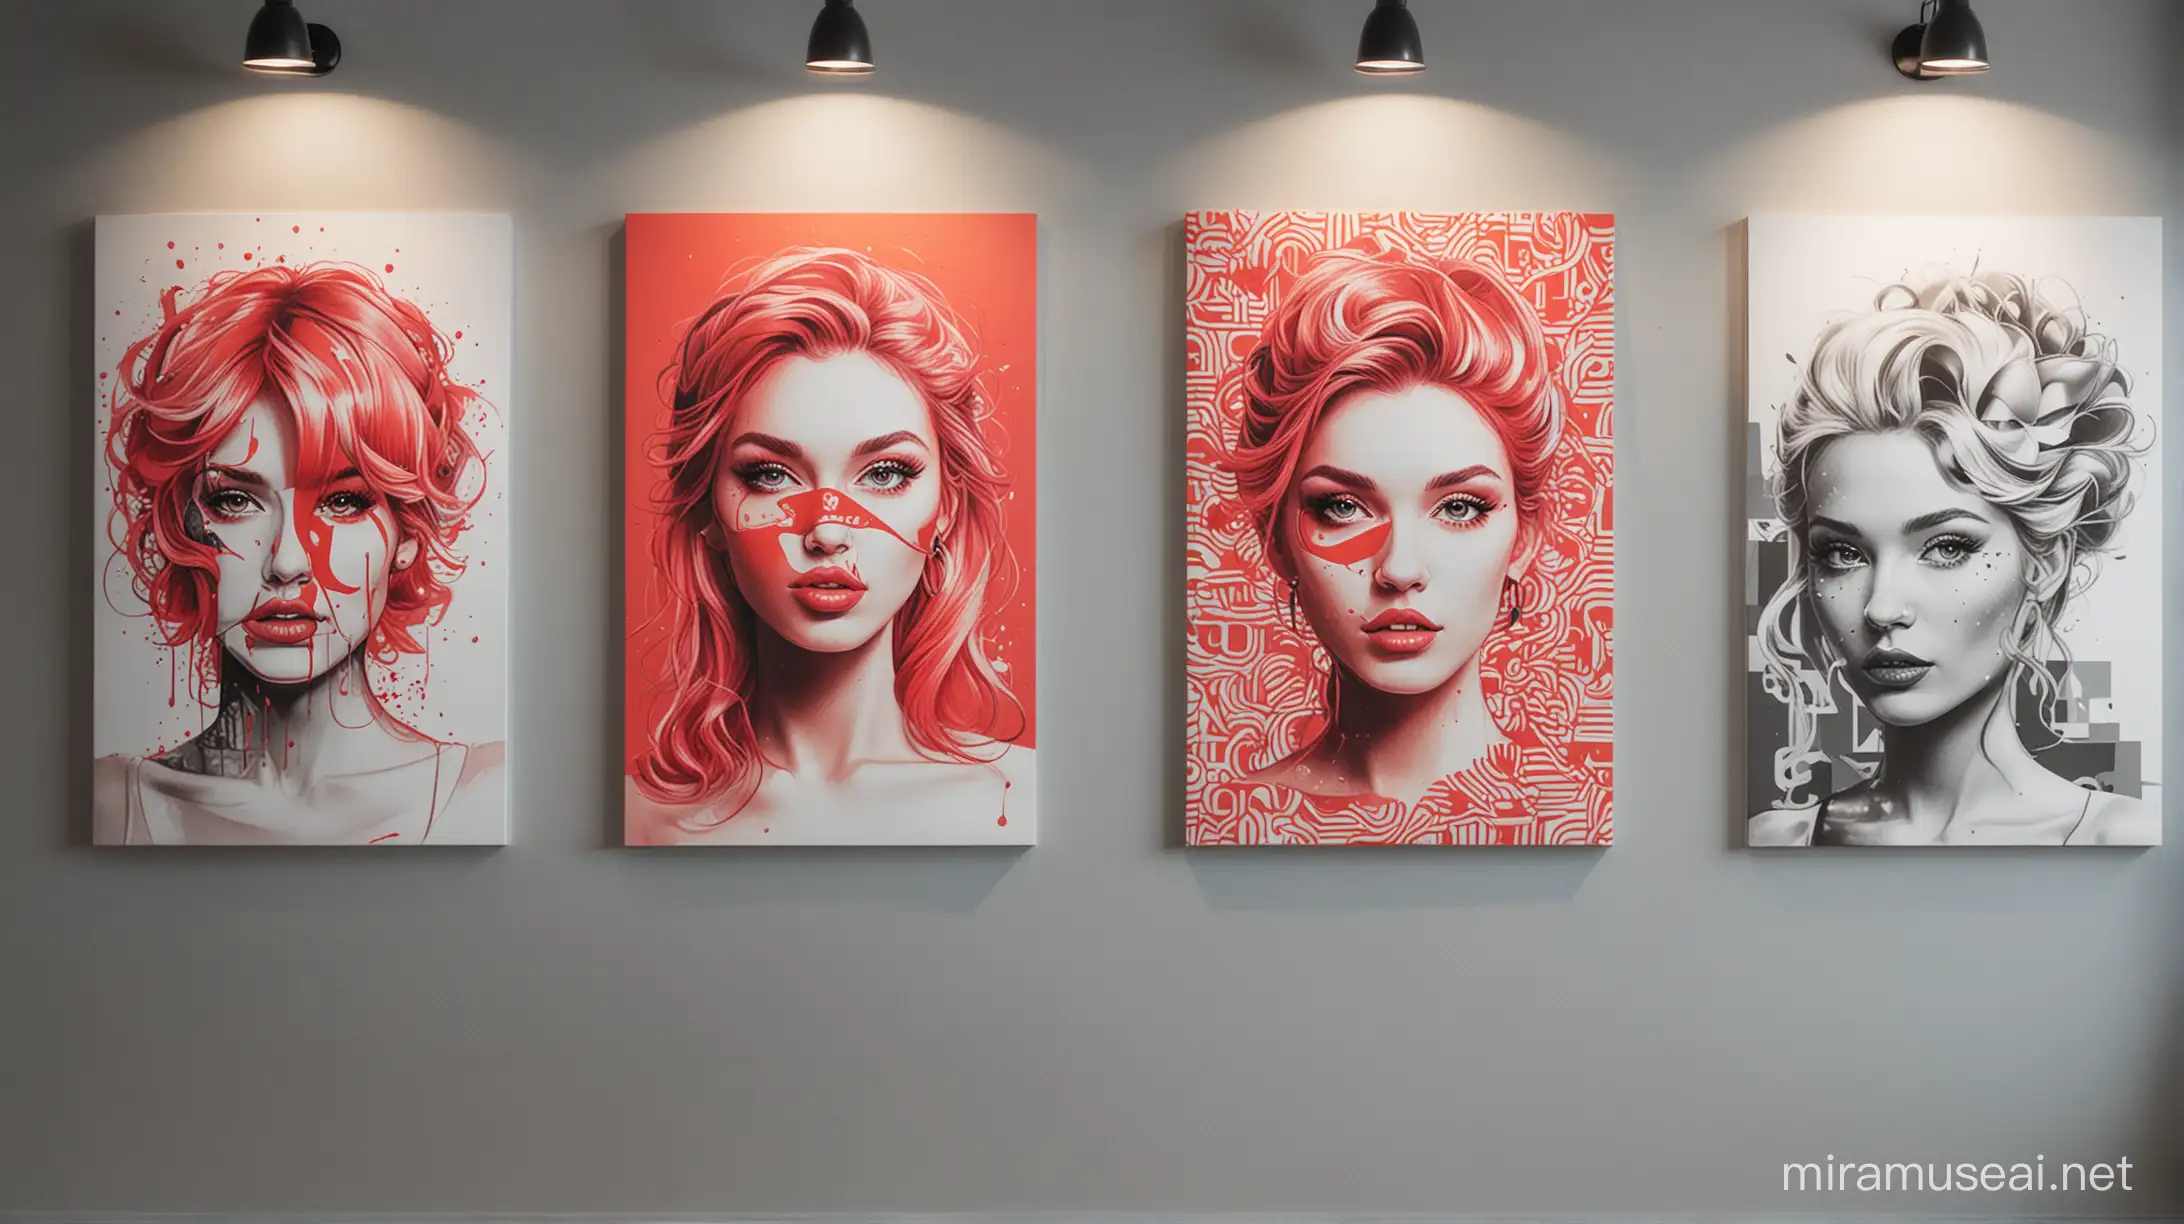 Three Vibrant Wall Art Pieces for Creative Agency Decor